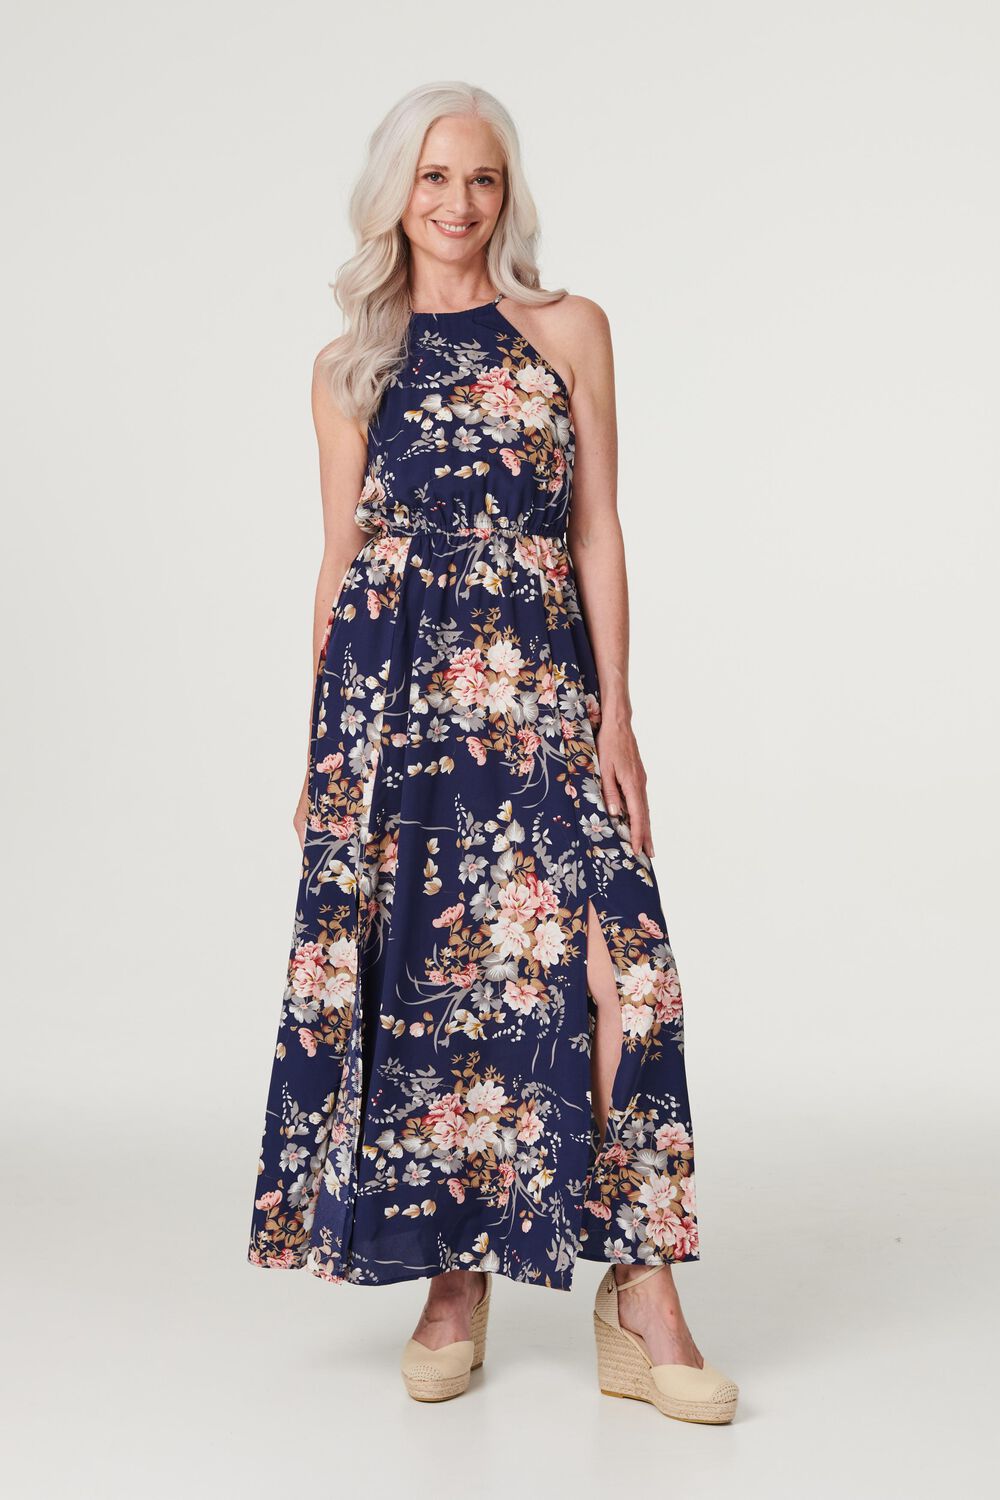 Izabel London Navy - Floral Halter Neck Maxi Dress, Size: 14